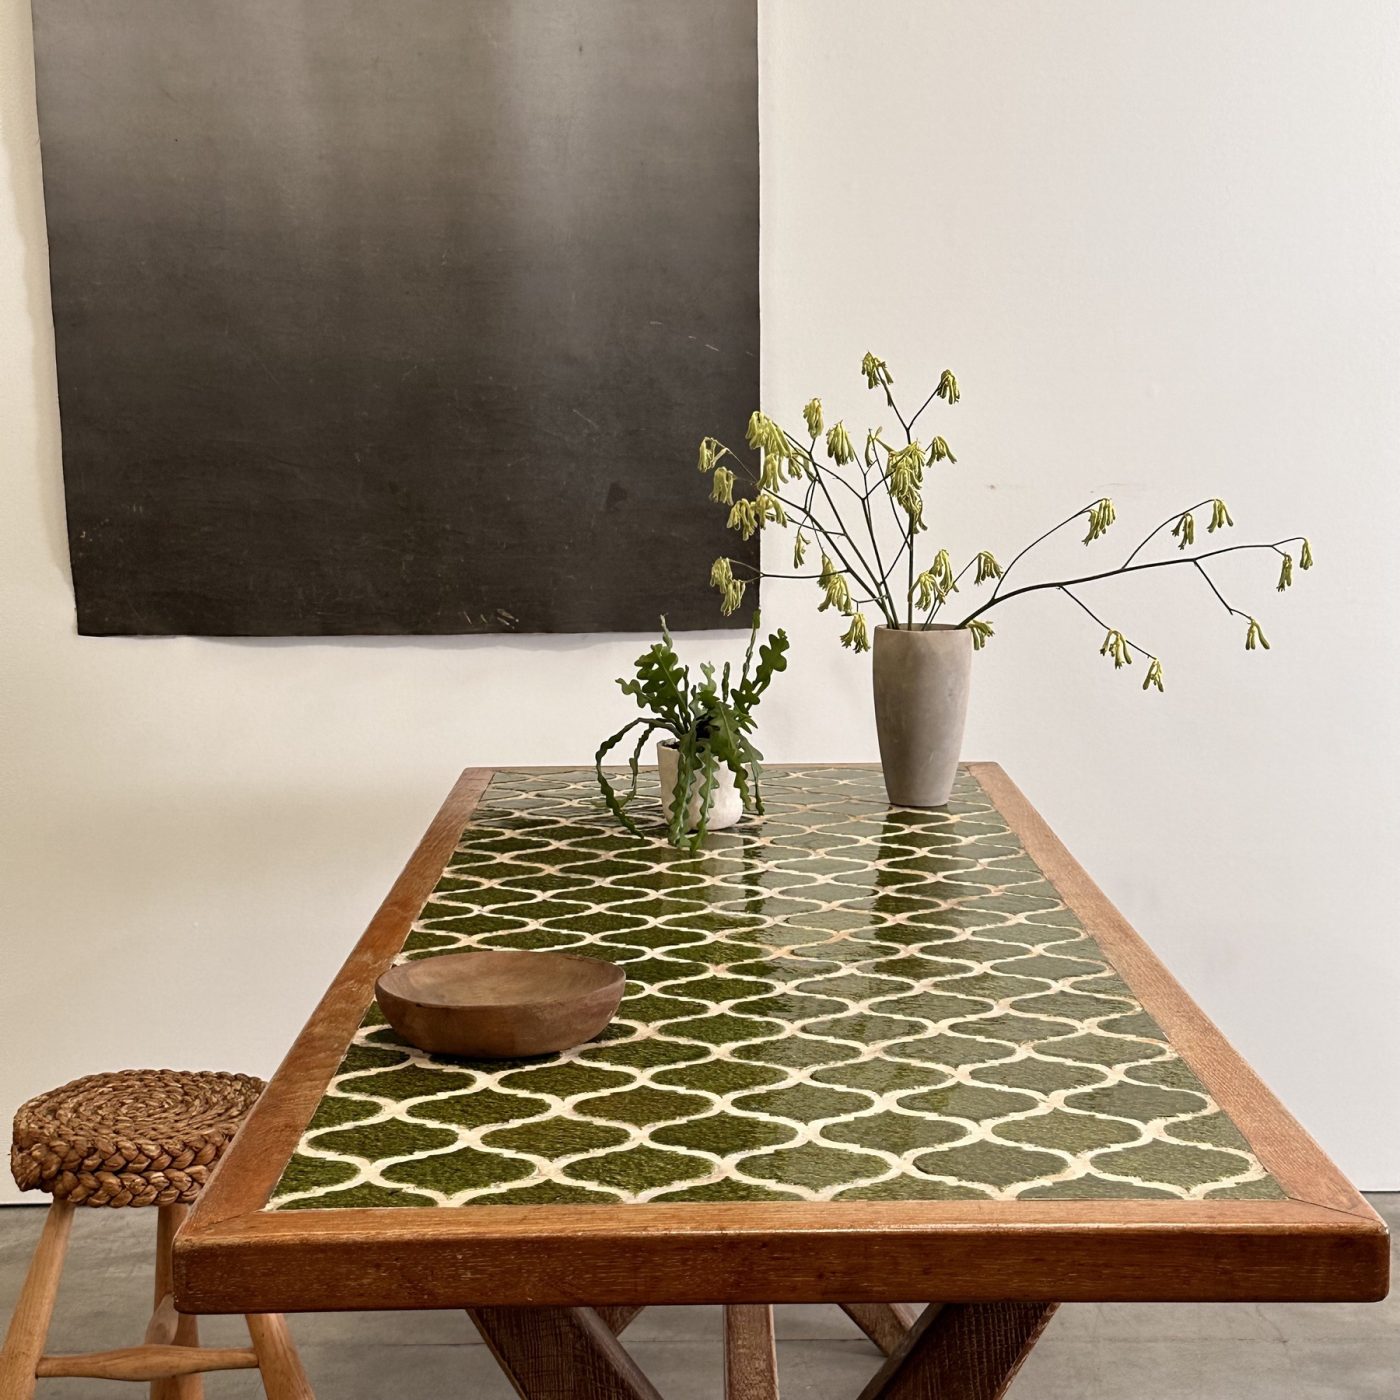 objet-vagabond-tiles-table0011